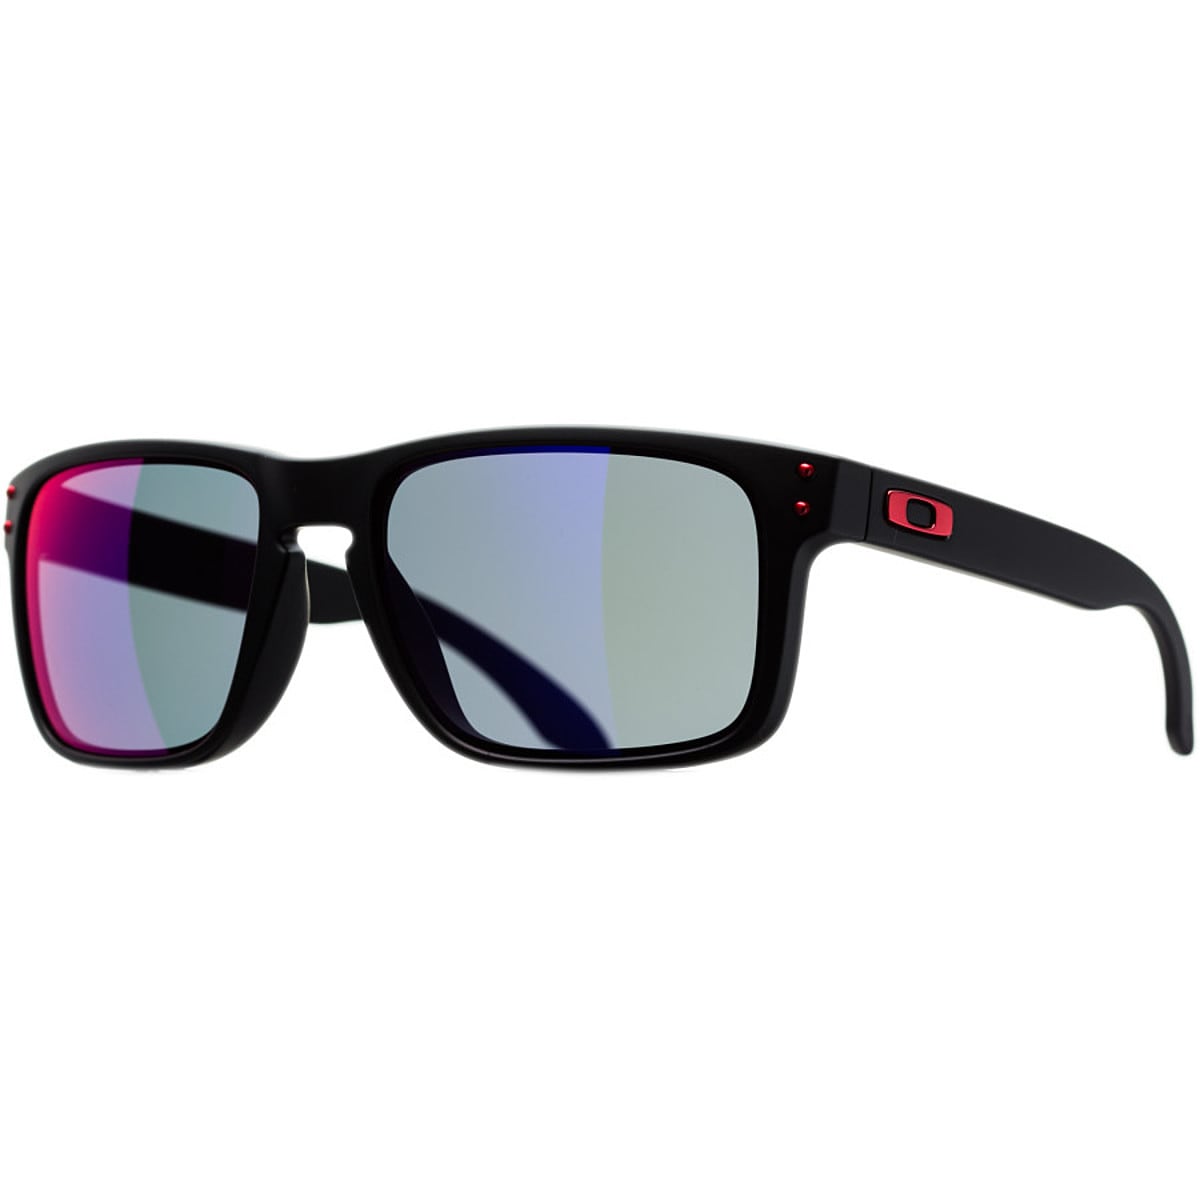 Oakley Holbrook Sunglasses - Accessories